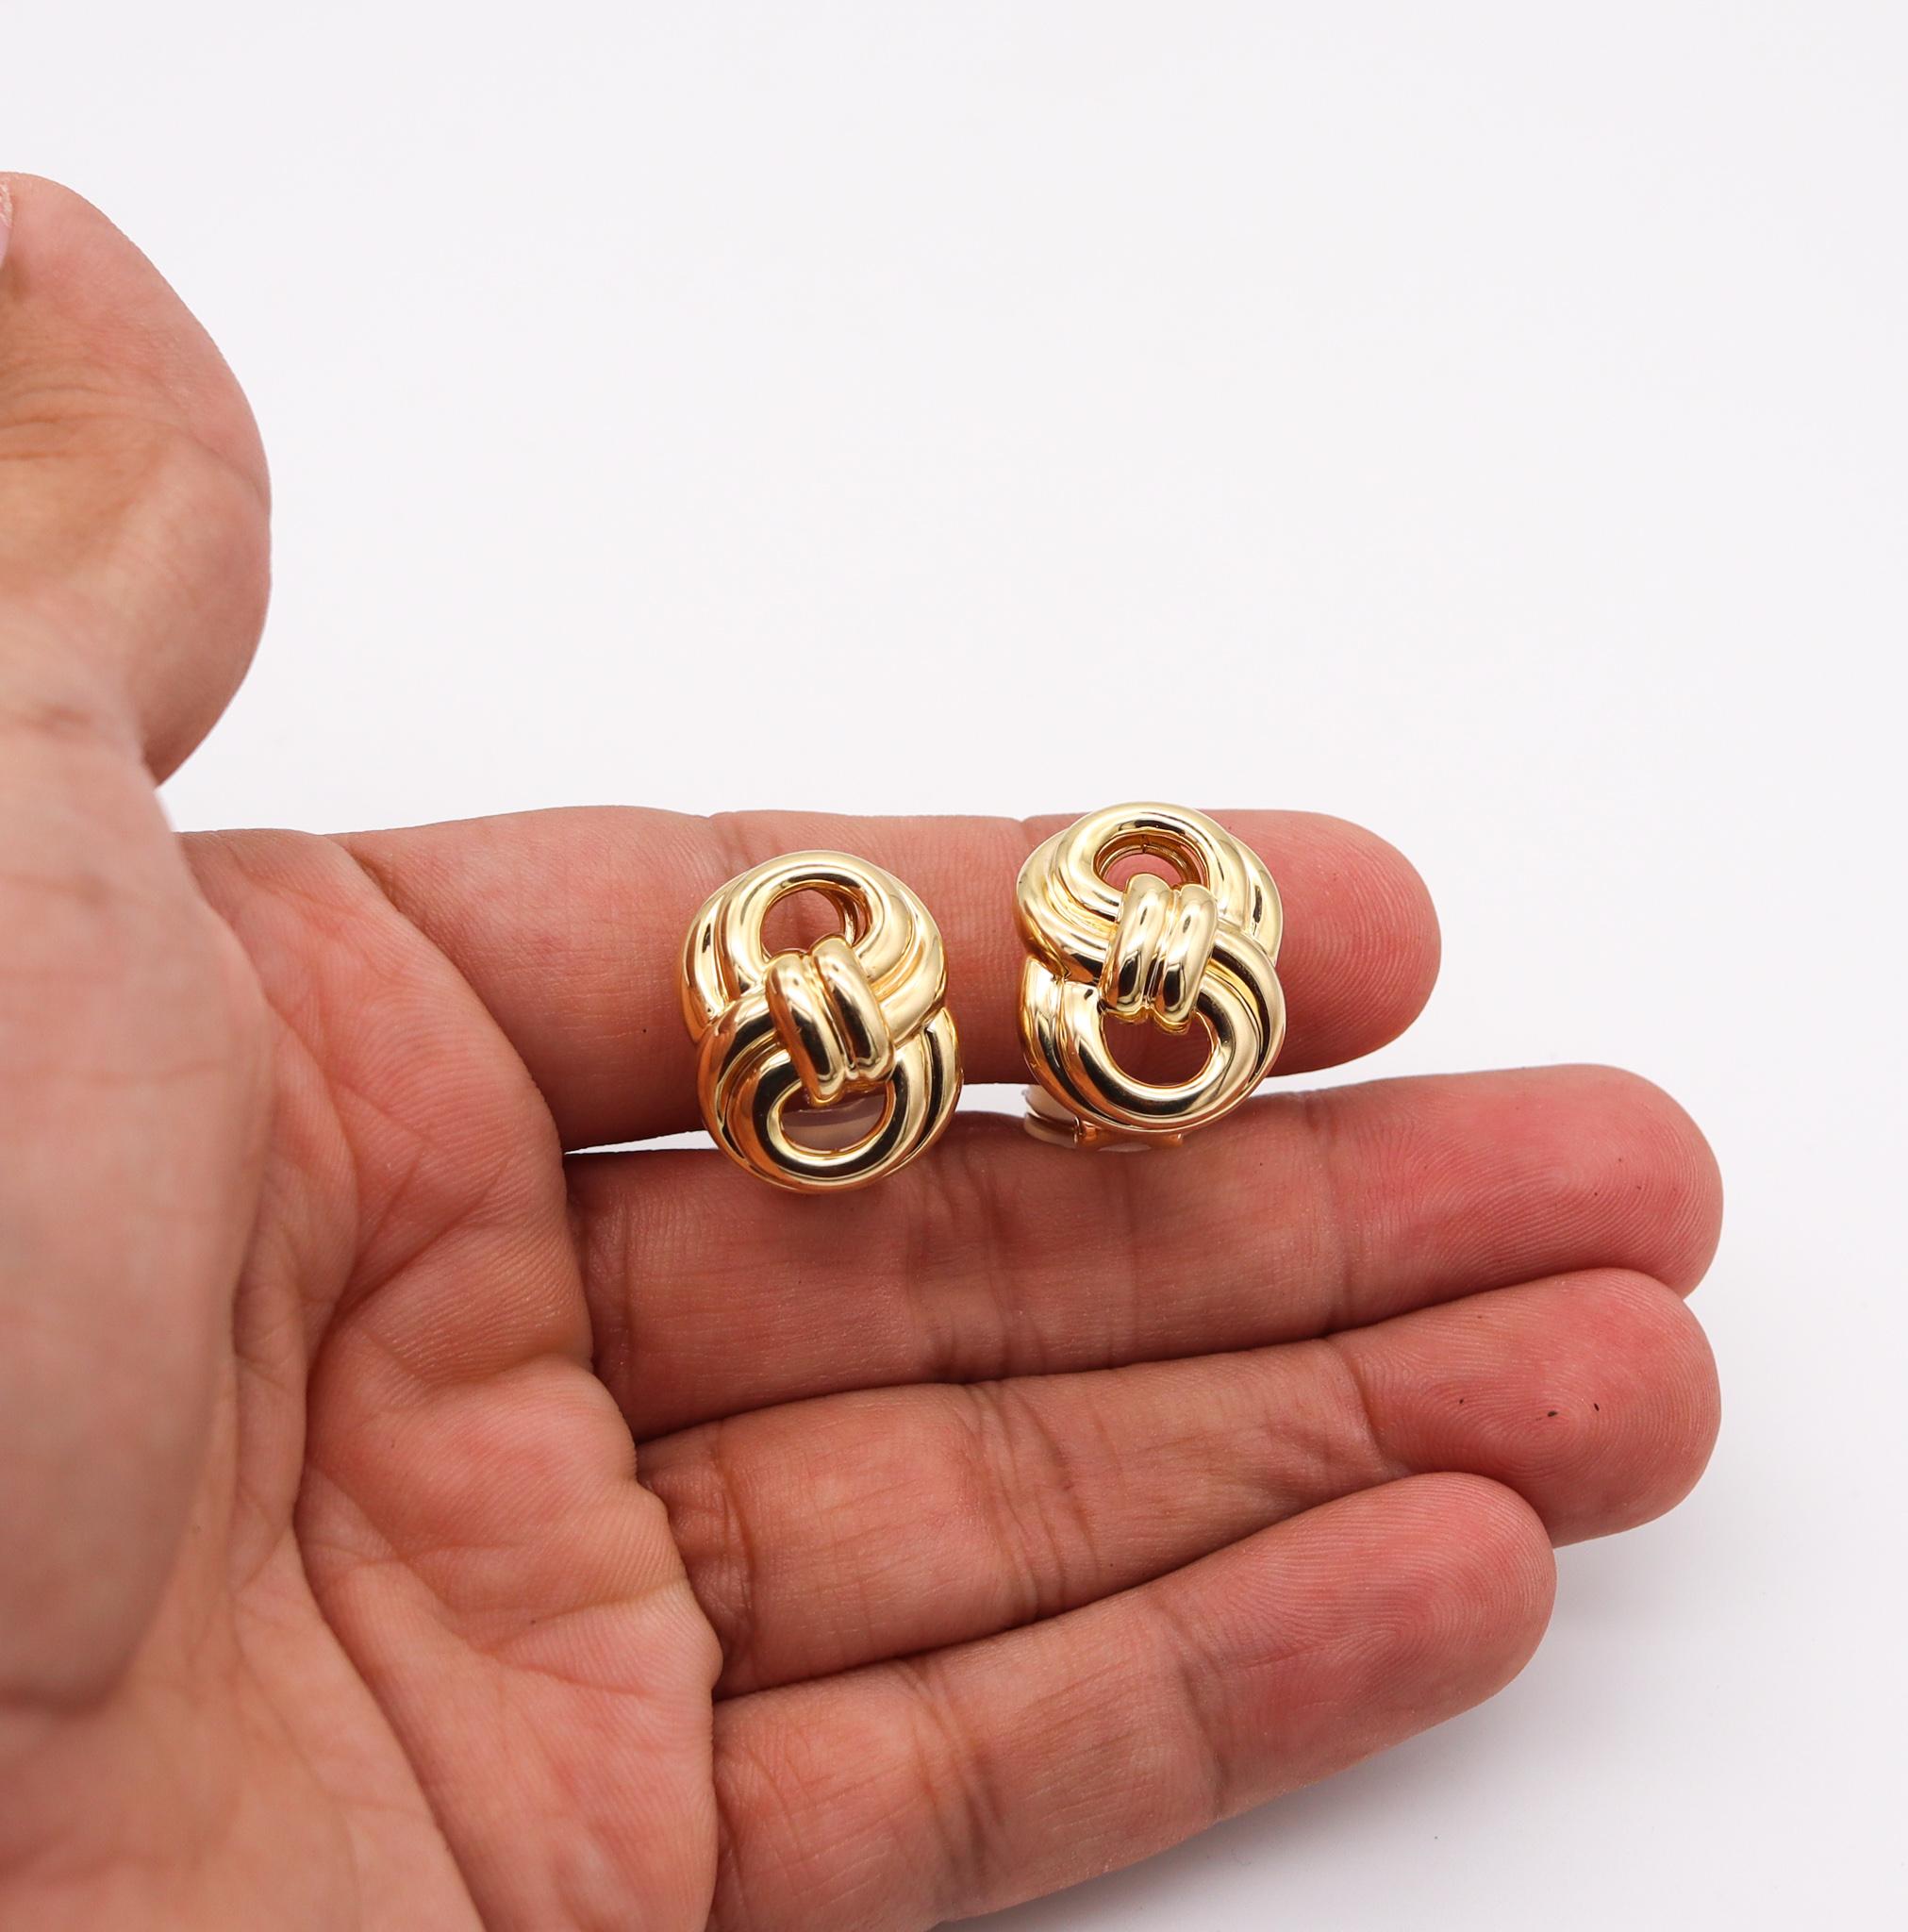 Women's Verdura Milan Infinity Knots Clips on Earrings in Solid 18Kt Yellow Gold